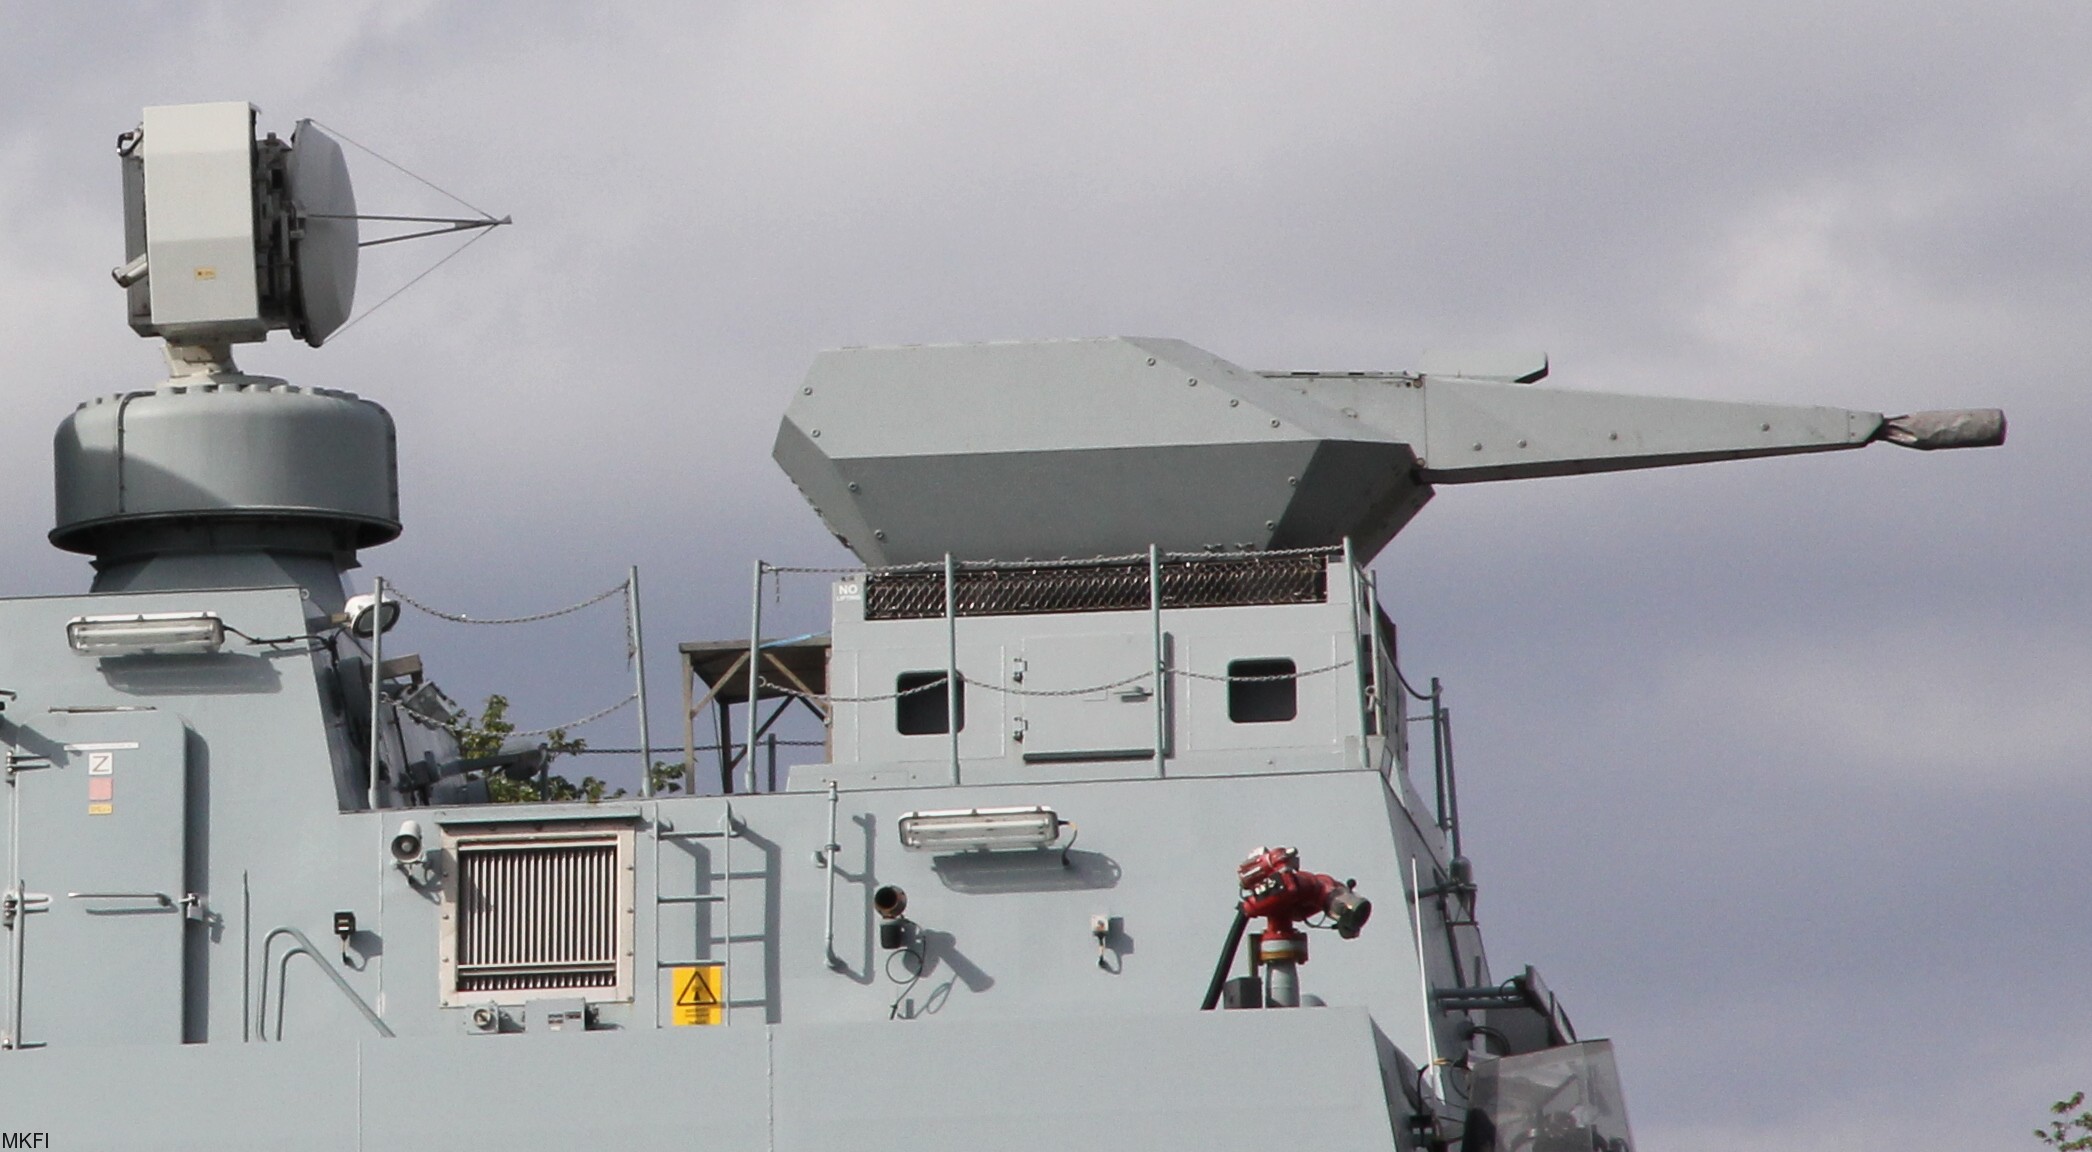 f-362 hdms peter willemoes iver huitfeldt class guided missile frigate ffg royal danish navy 05a saab ceros 200 fire control radar oerlikon millennium ciws